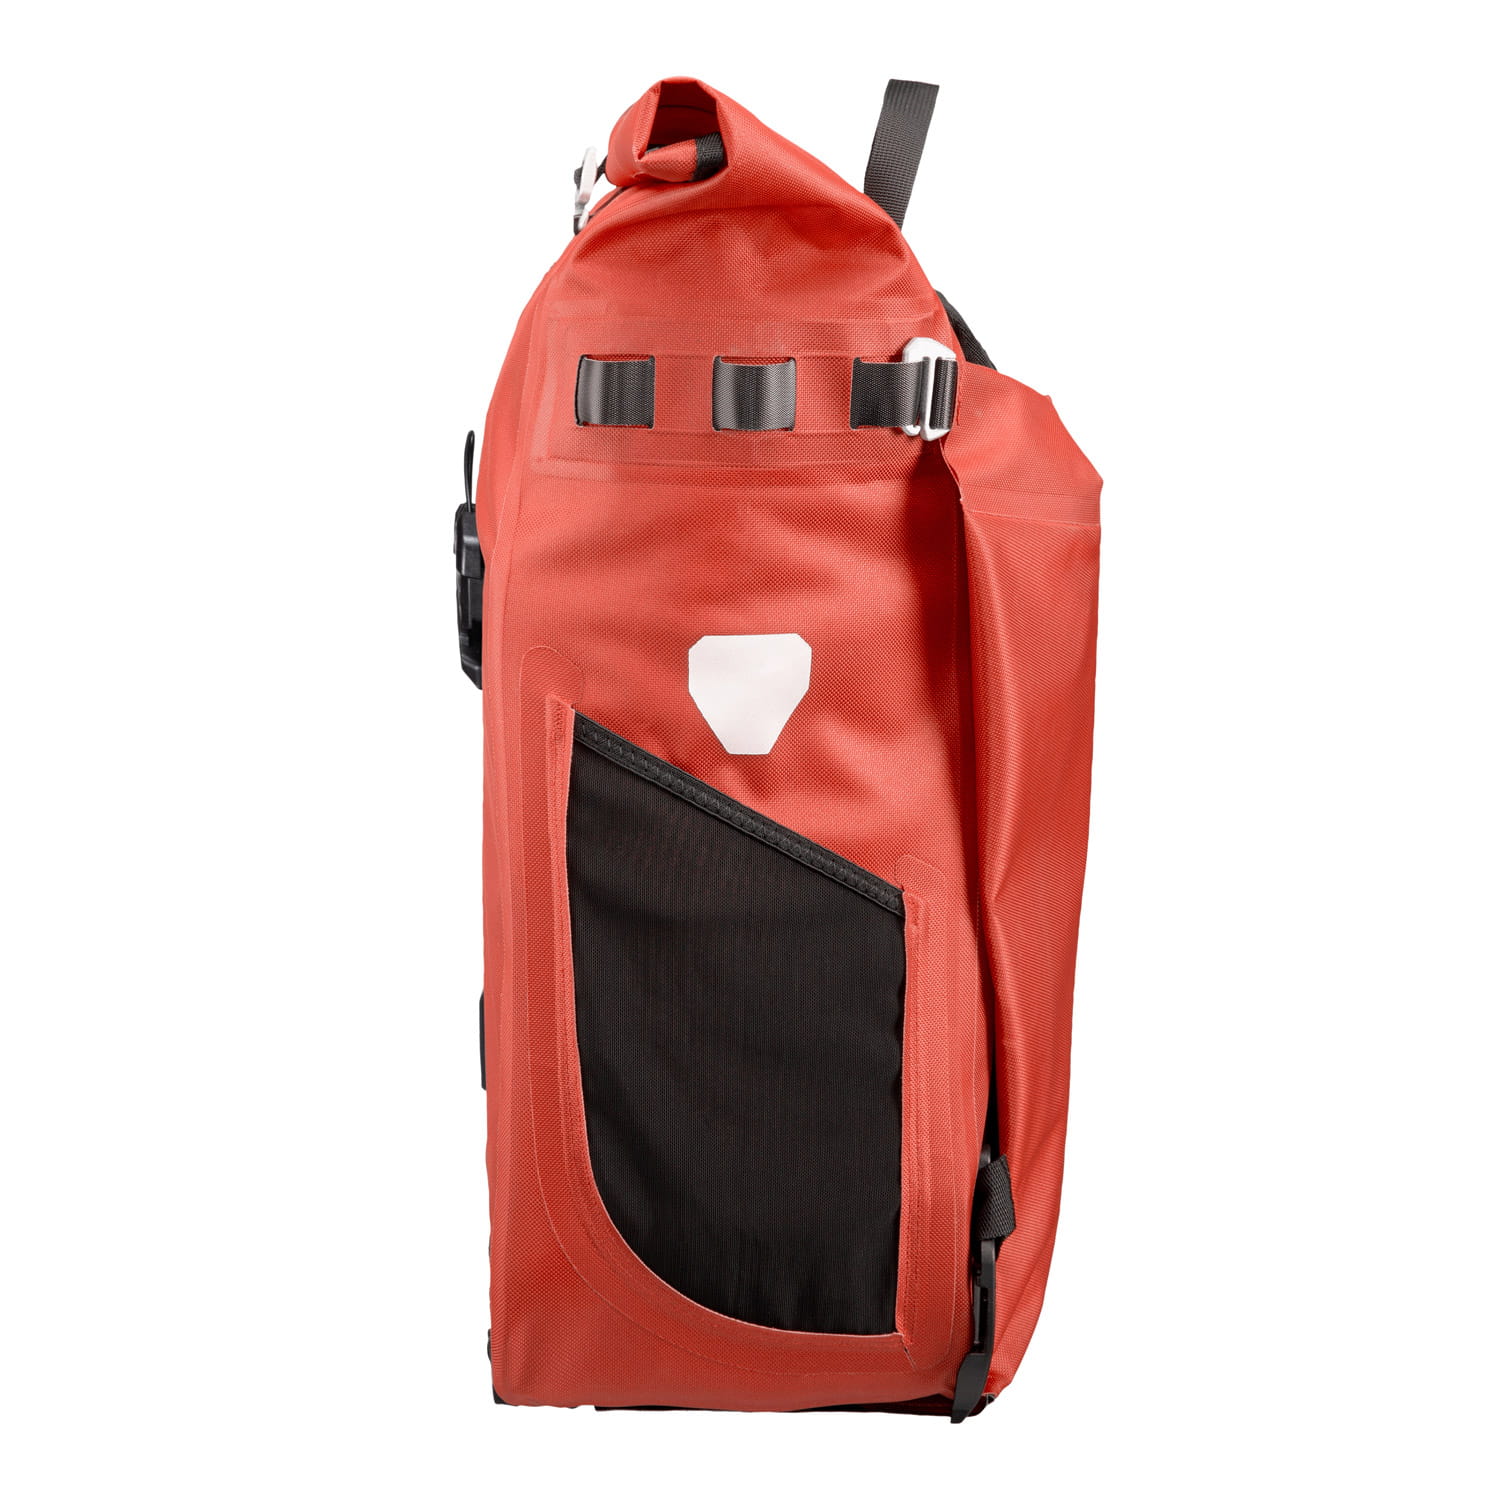 Ortlieb Vario PS QL3.1 Backpack and Rear Pannier Bag 26L